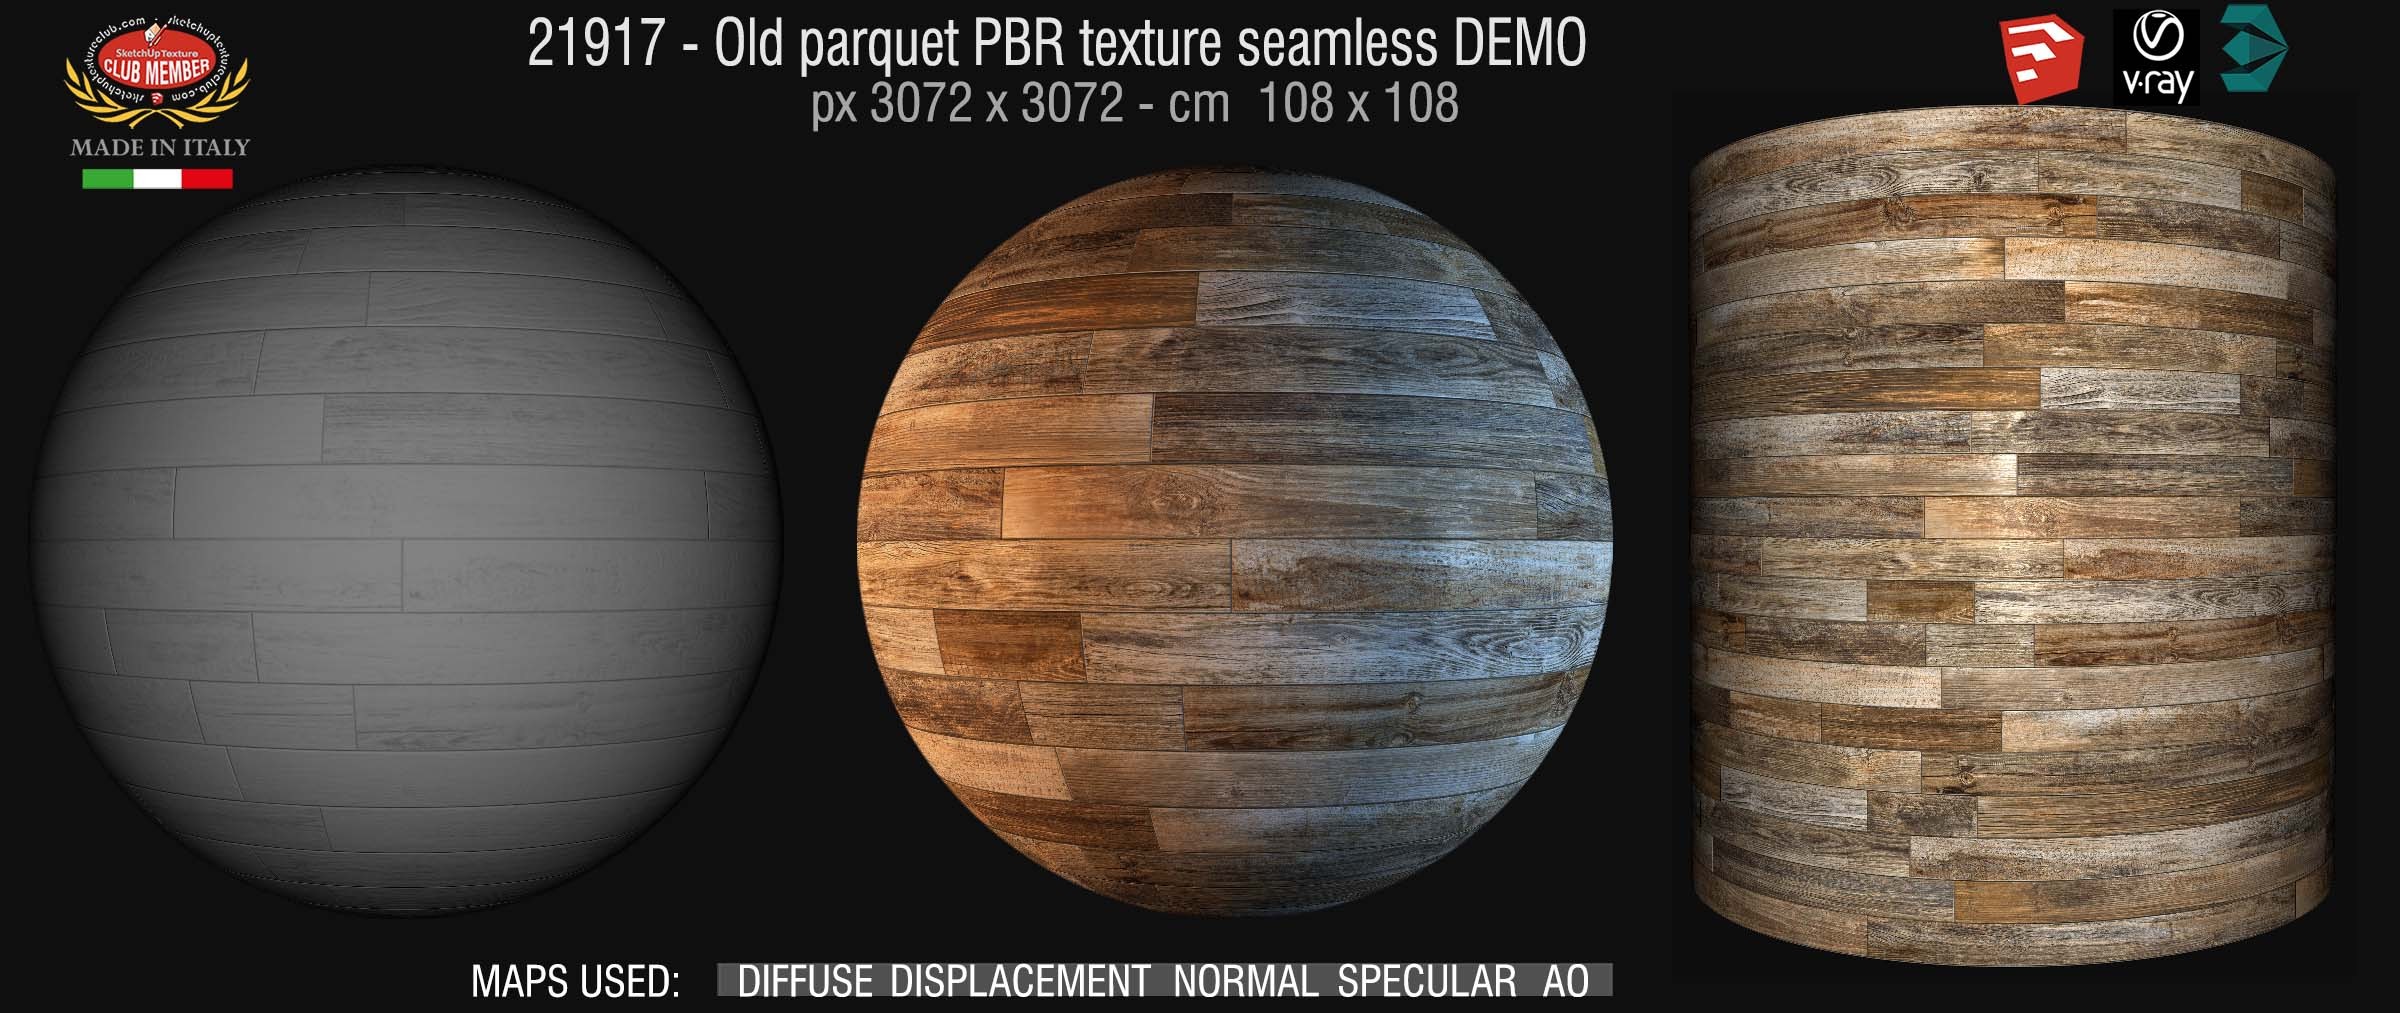 21917 Old parquet PBR texture seamless DEMO